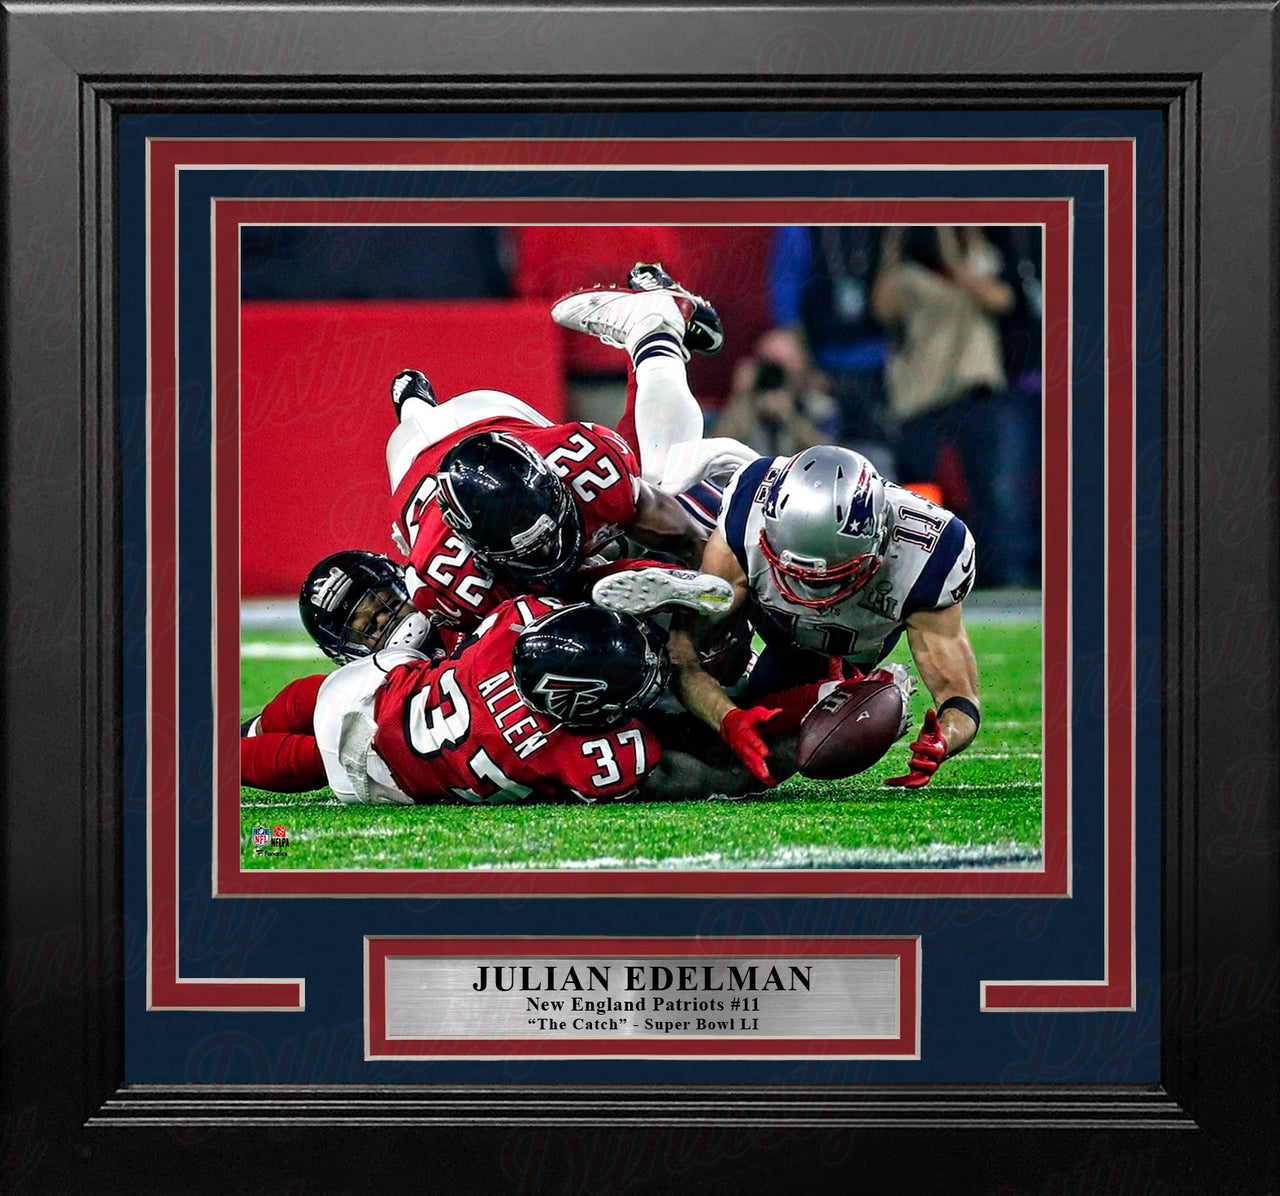 Julian Edelman Super Bowl LI Catch New England Patriots 8" x 10" Framed Football Photo - Dynasty Sports & Framing 